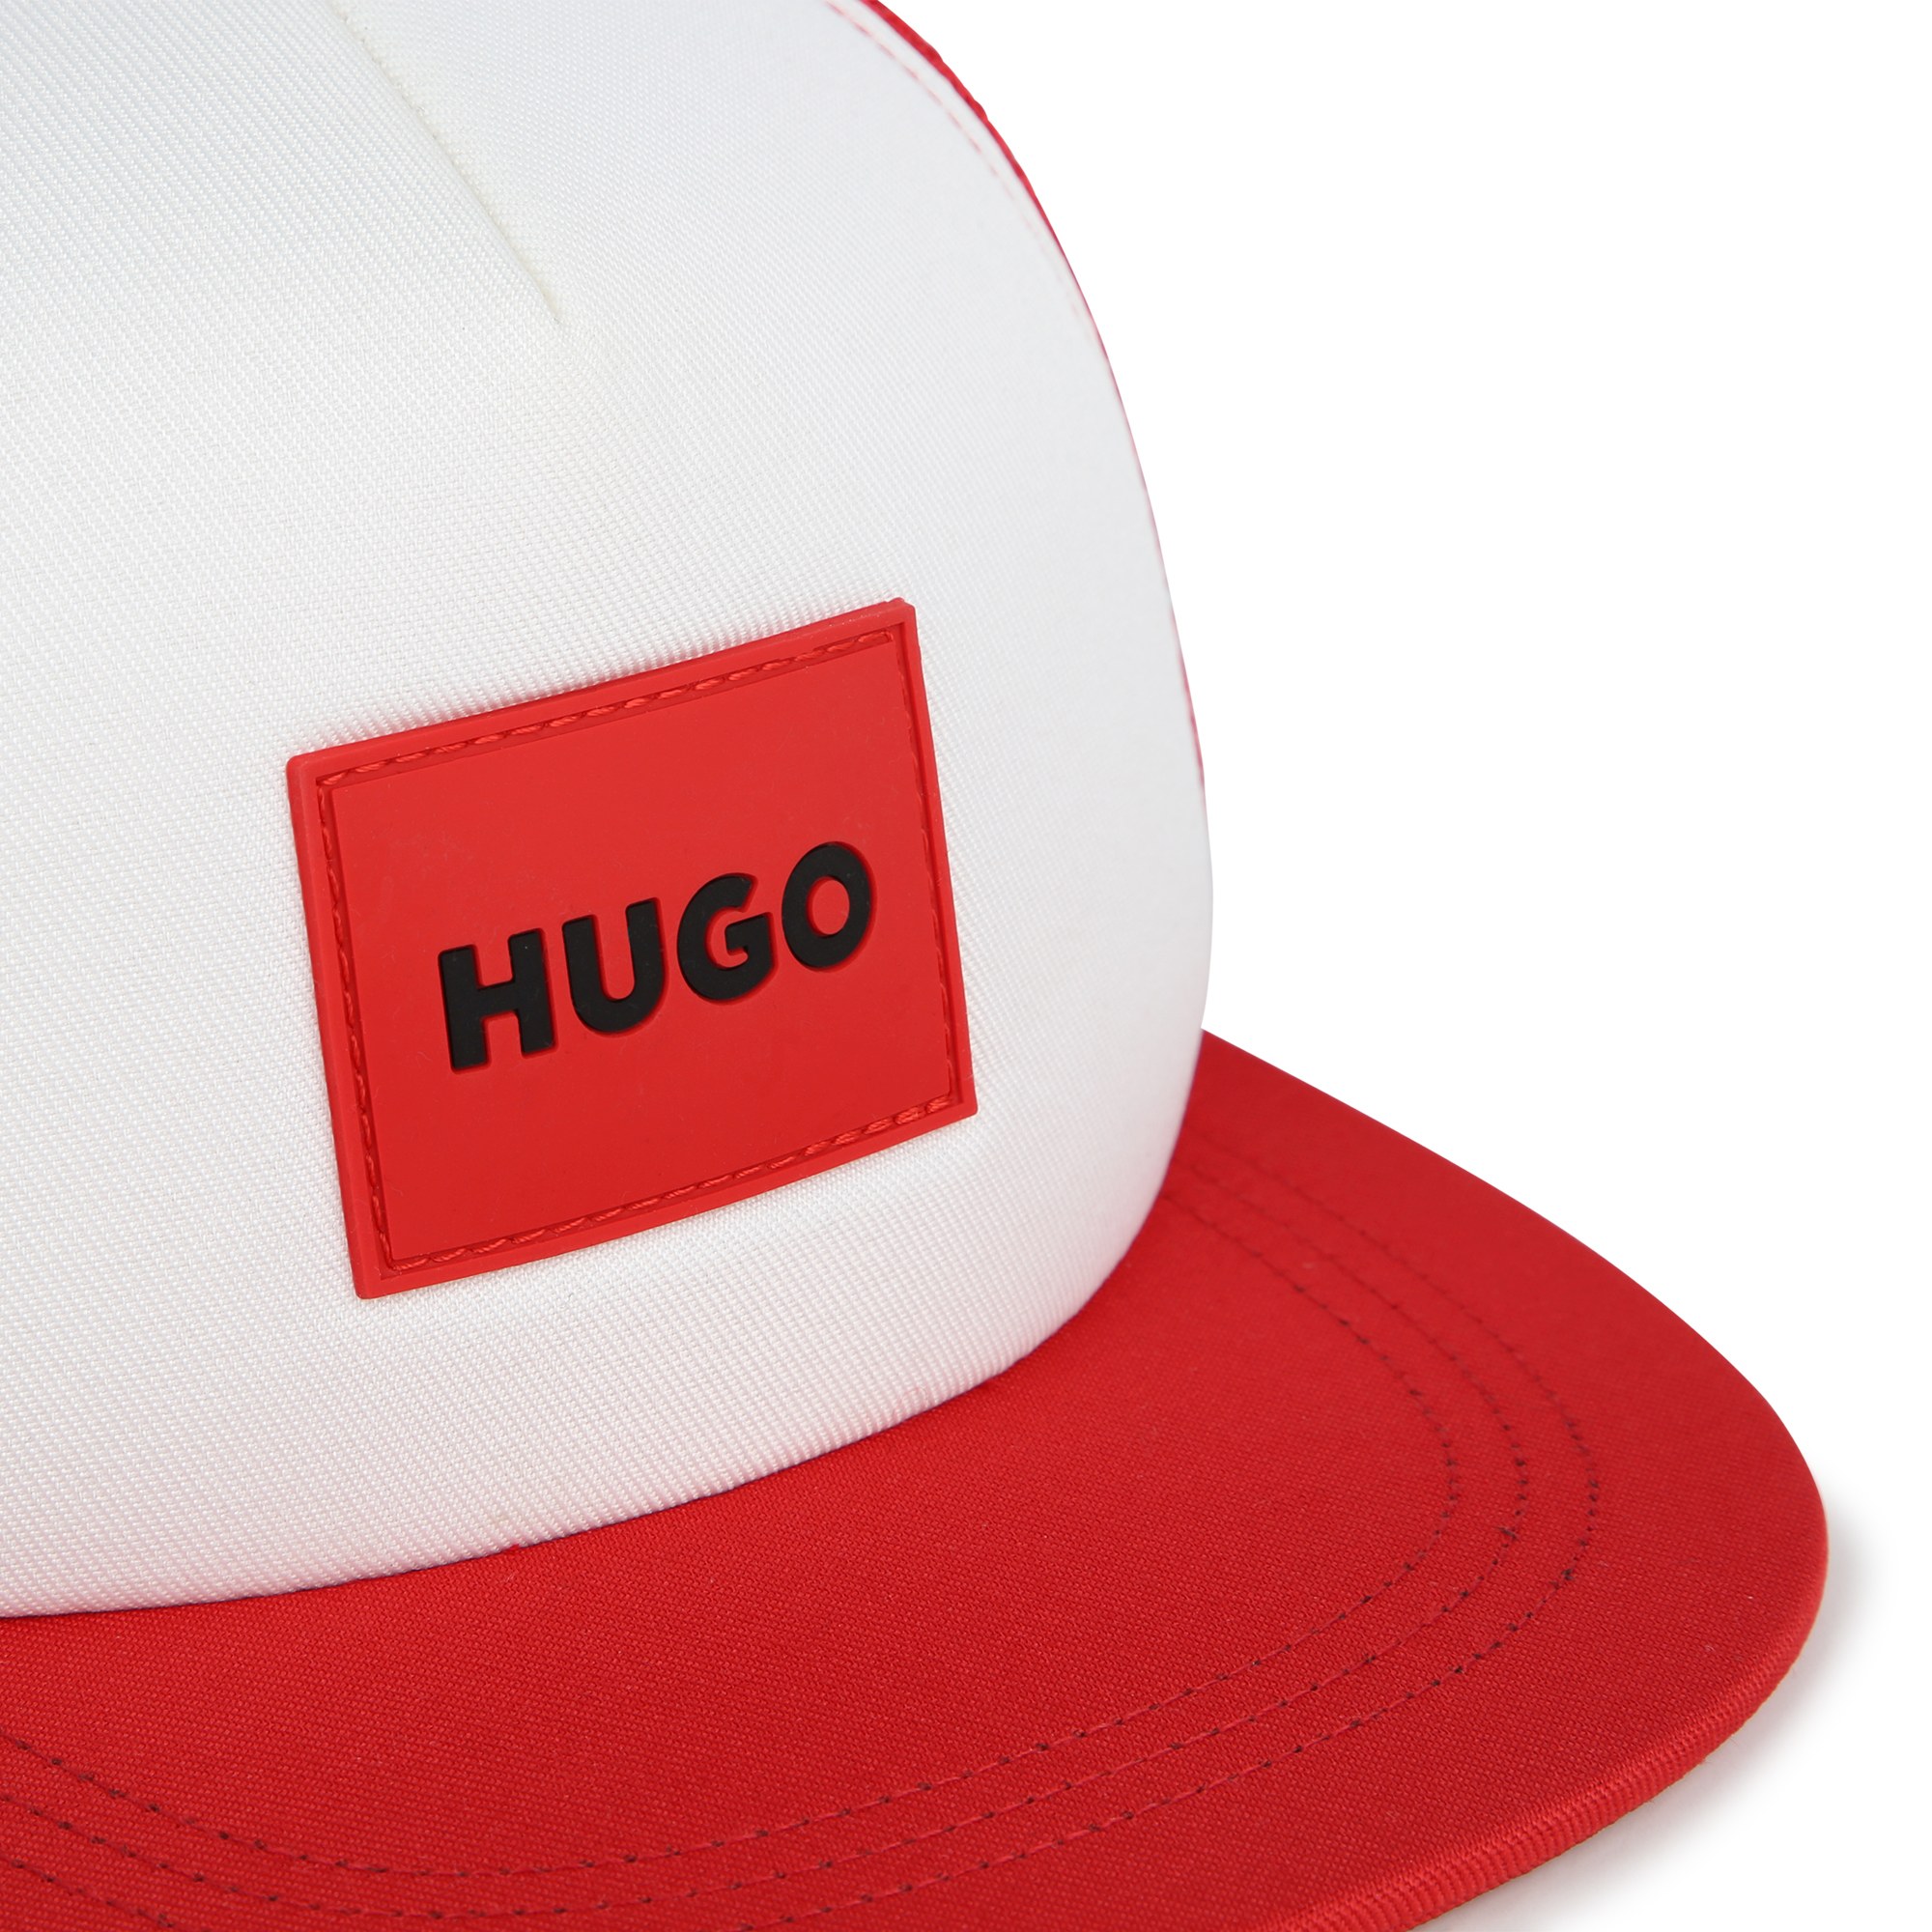 Adjustable cap HUGO for UNISEX